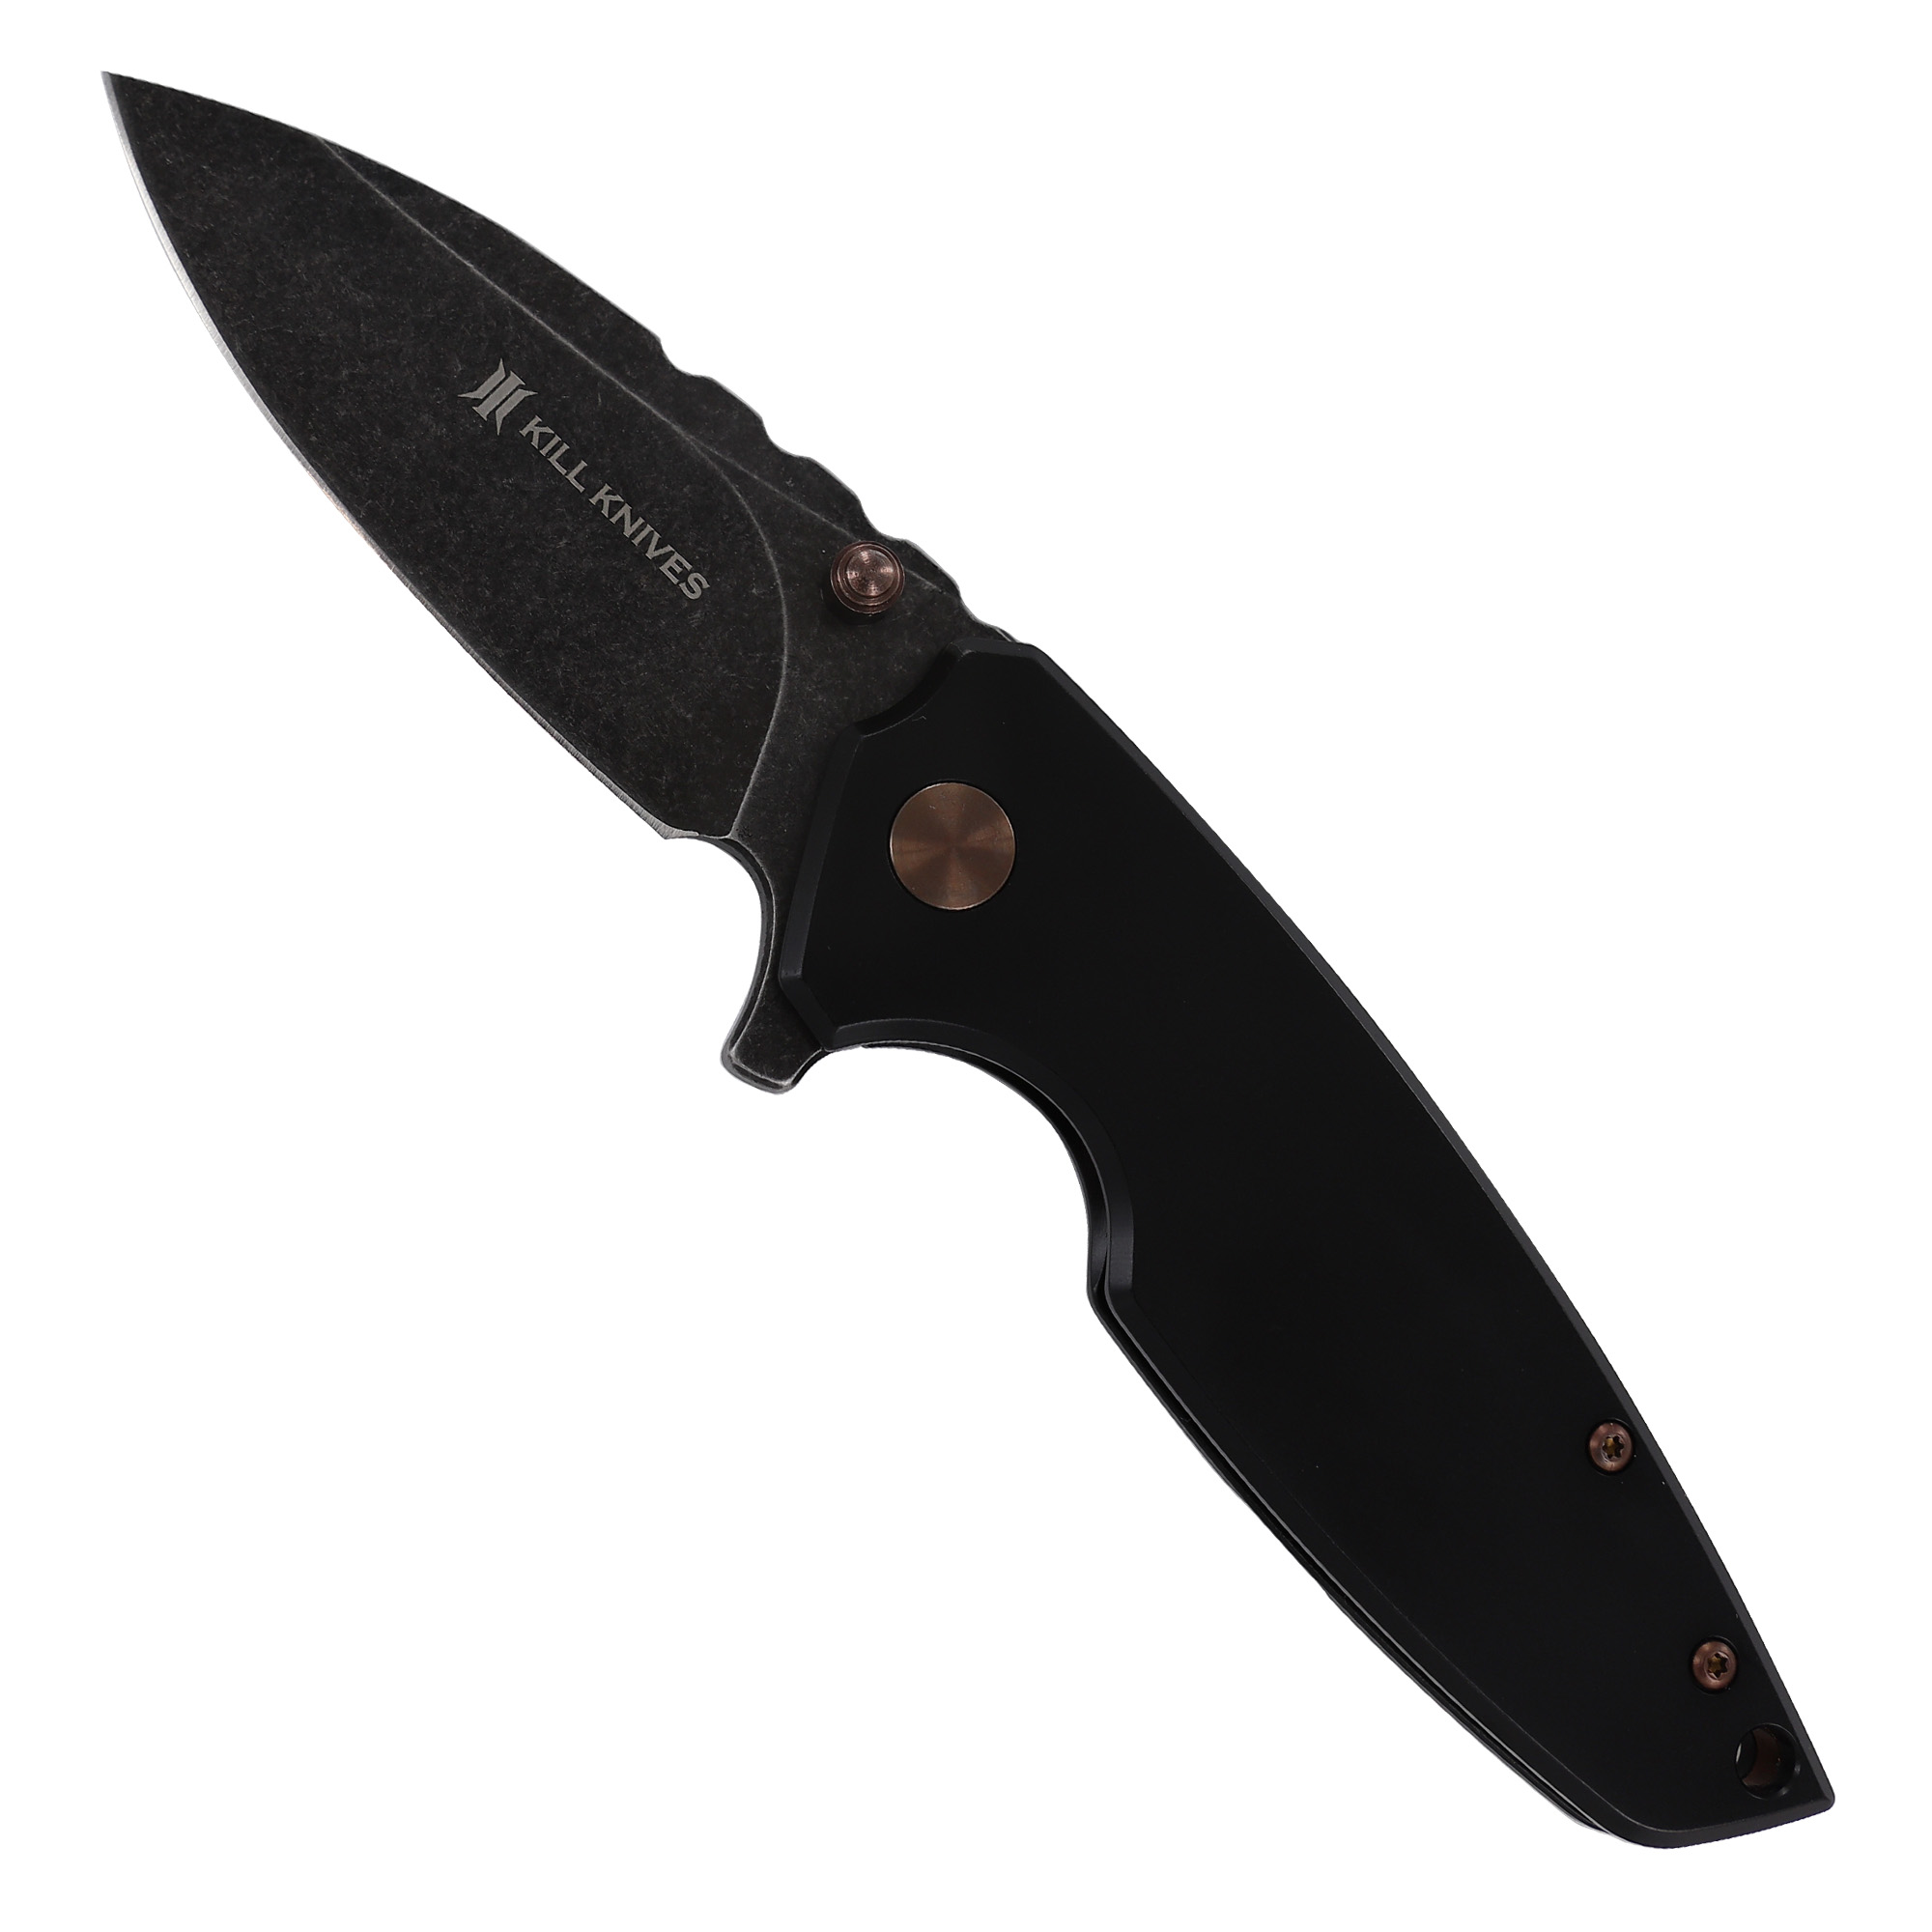 KILL KNIVES ? Nightshade High Quality D2 Steel Ball Bearing Spring Assist POCKET KNIFE